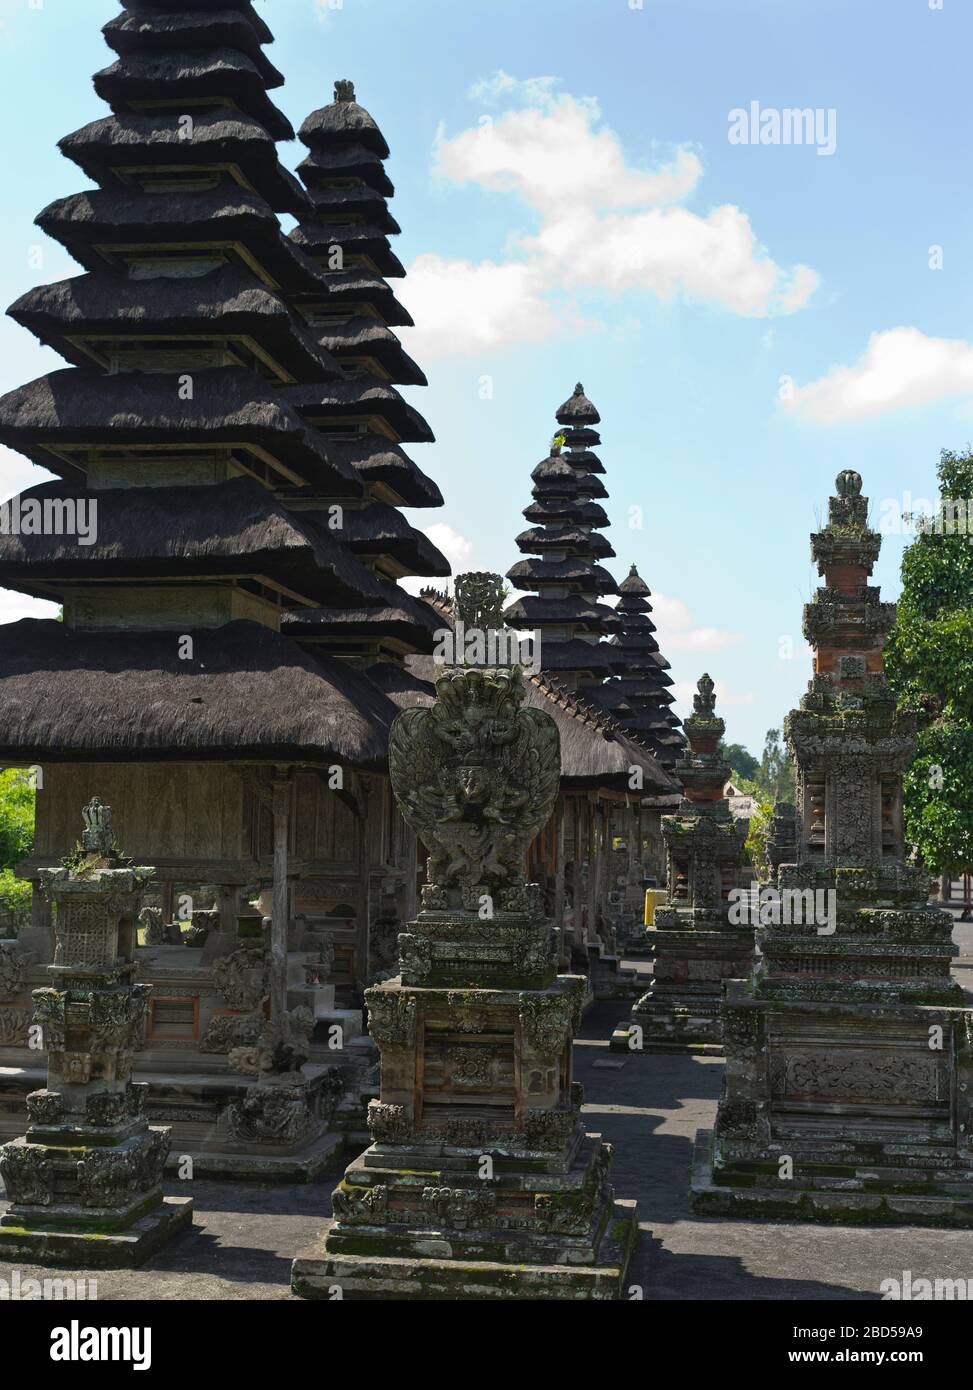 dh Pura Taman Ayun Royal Temple BALI INDONESIA Garuda shrine sculpture Balinese Hindu Mengwi inner sanctum shrines religion pelinggih meru towers Stock Photo